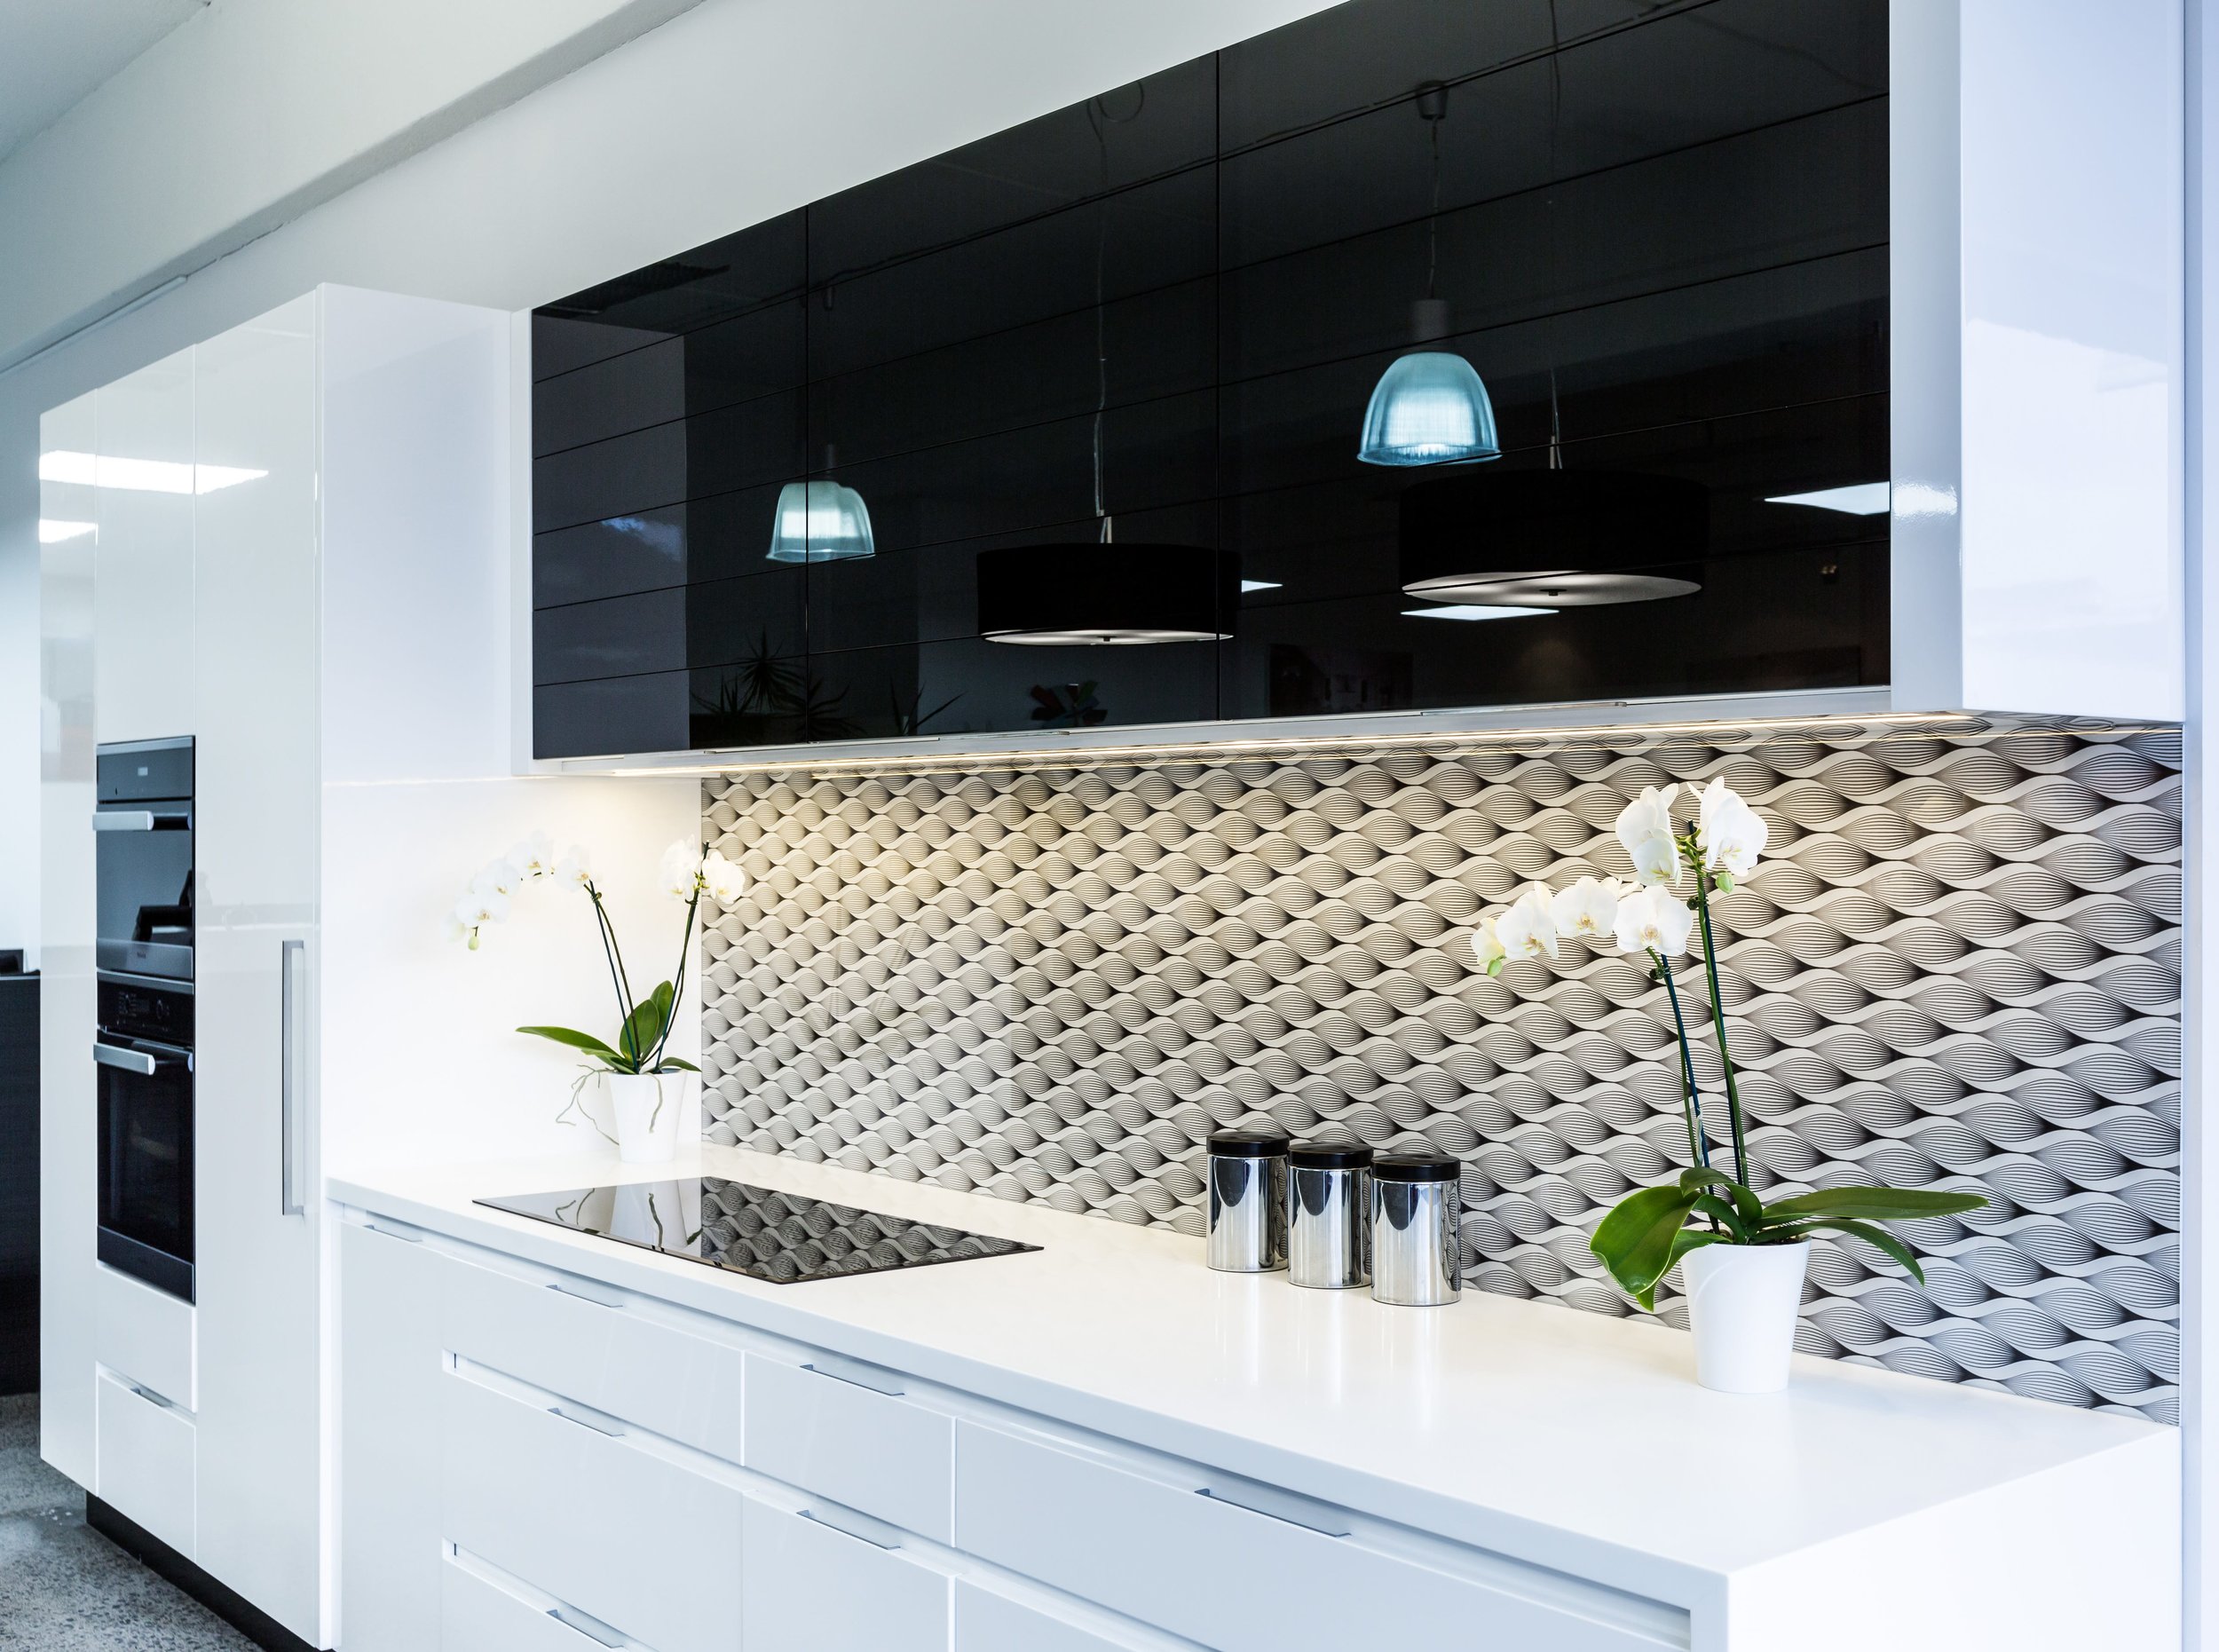 Abstract geometric black and white printed splashback for modern white kitchen